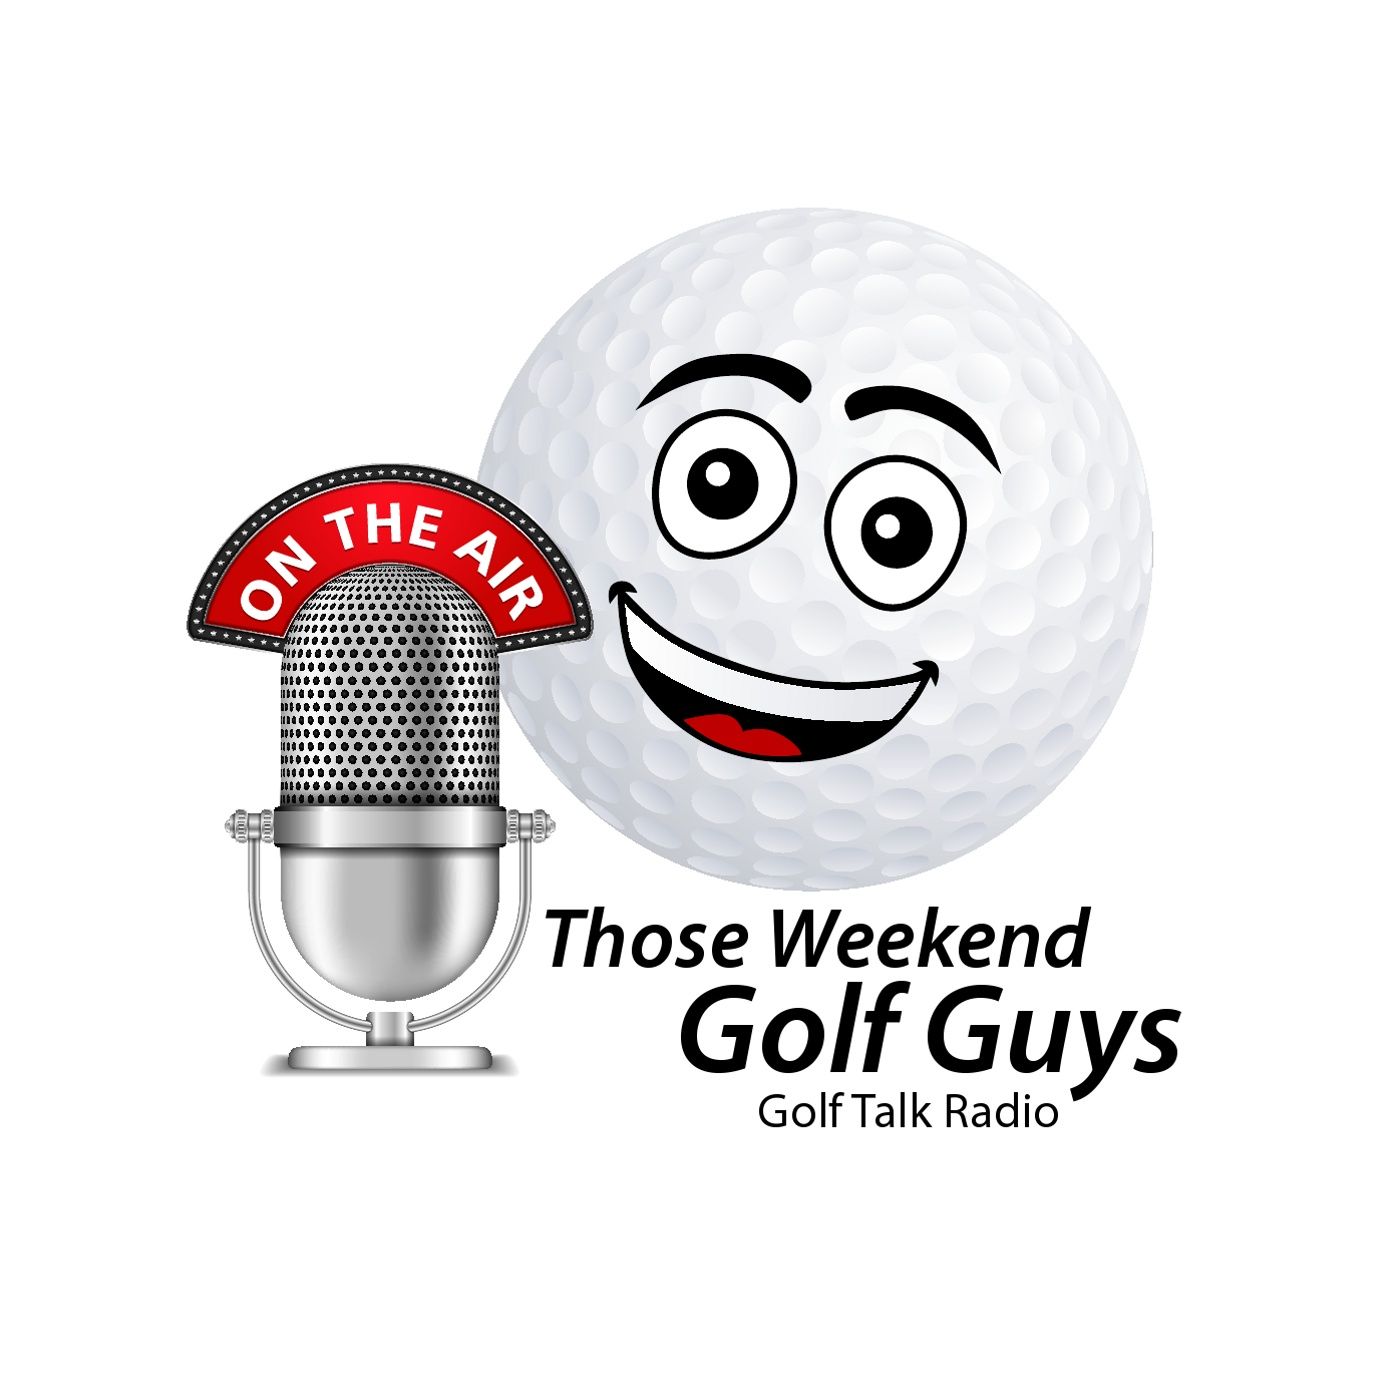 Those Weekend Golf Guys Live